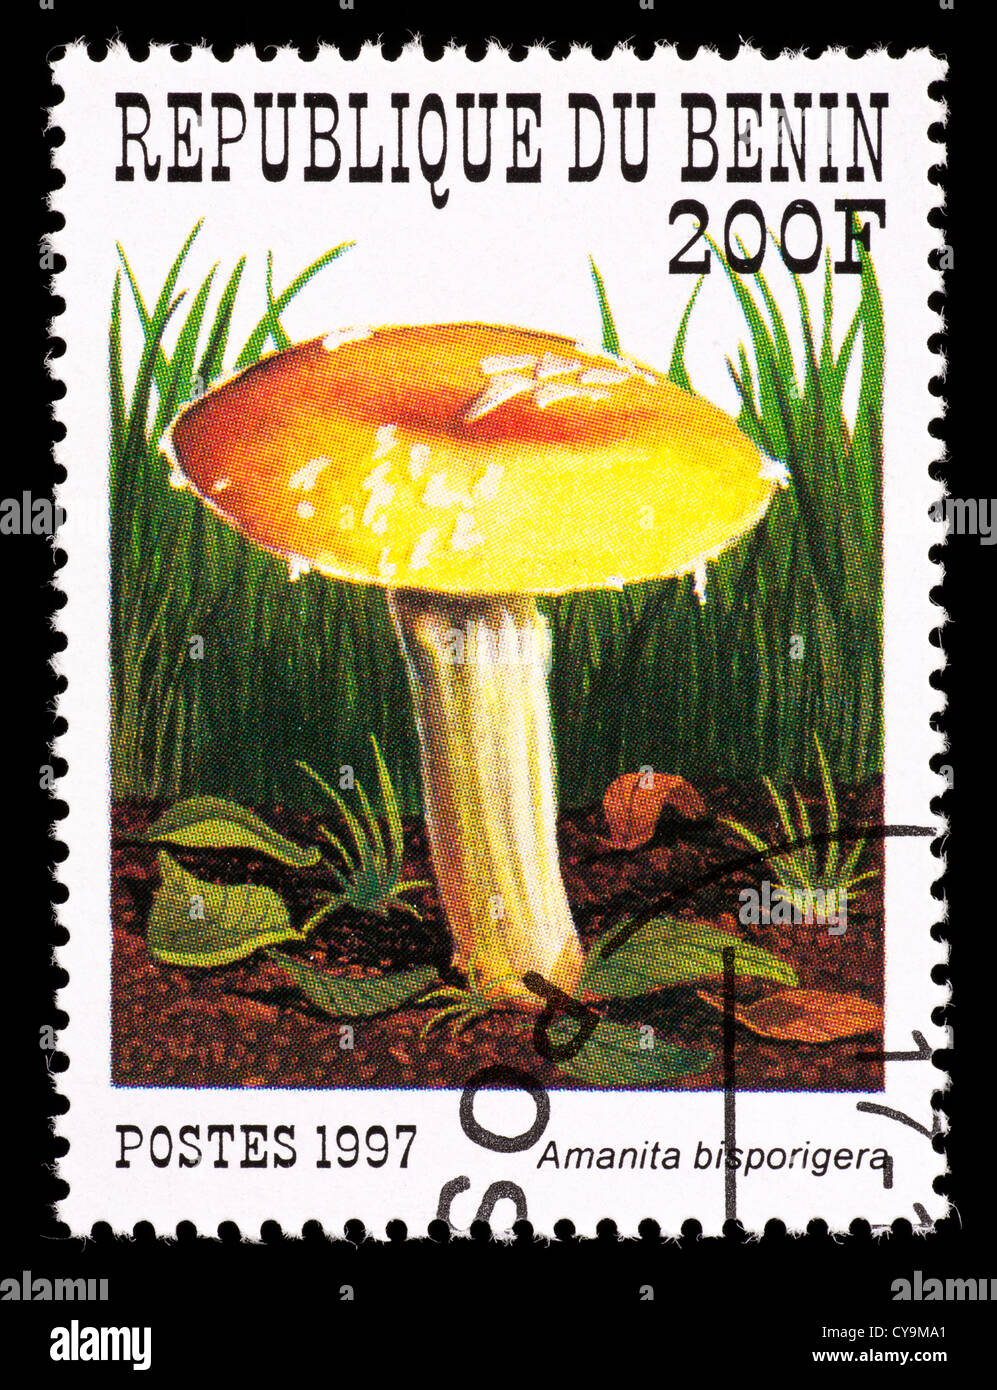 Postage stamp from Benin depicting a mushroom American destroying angel   mushroom (Amanita bisporigera) Stock Photo